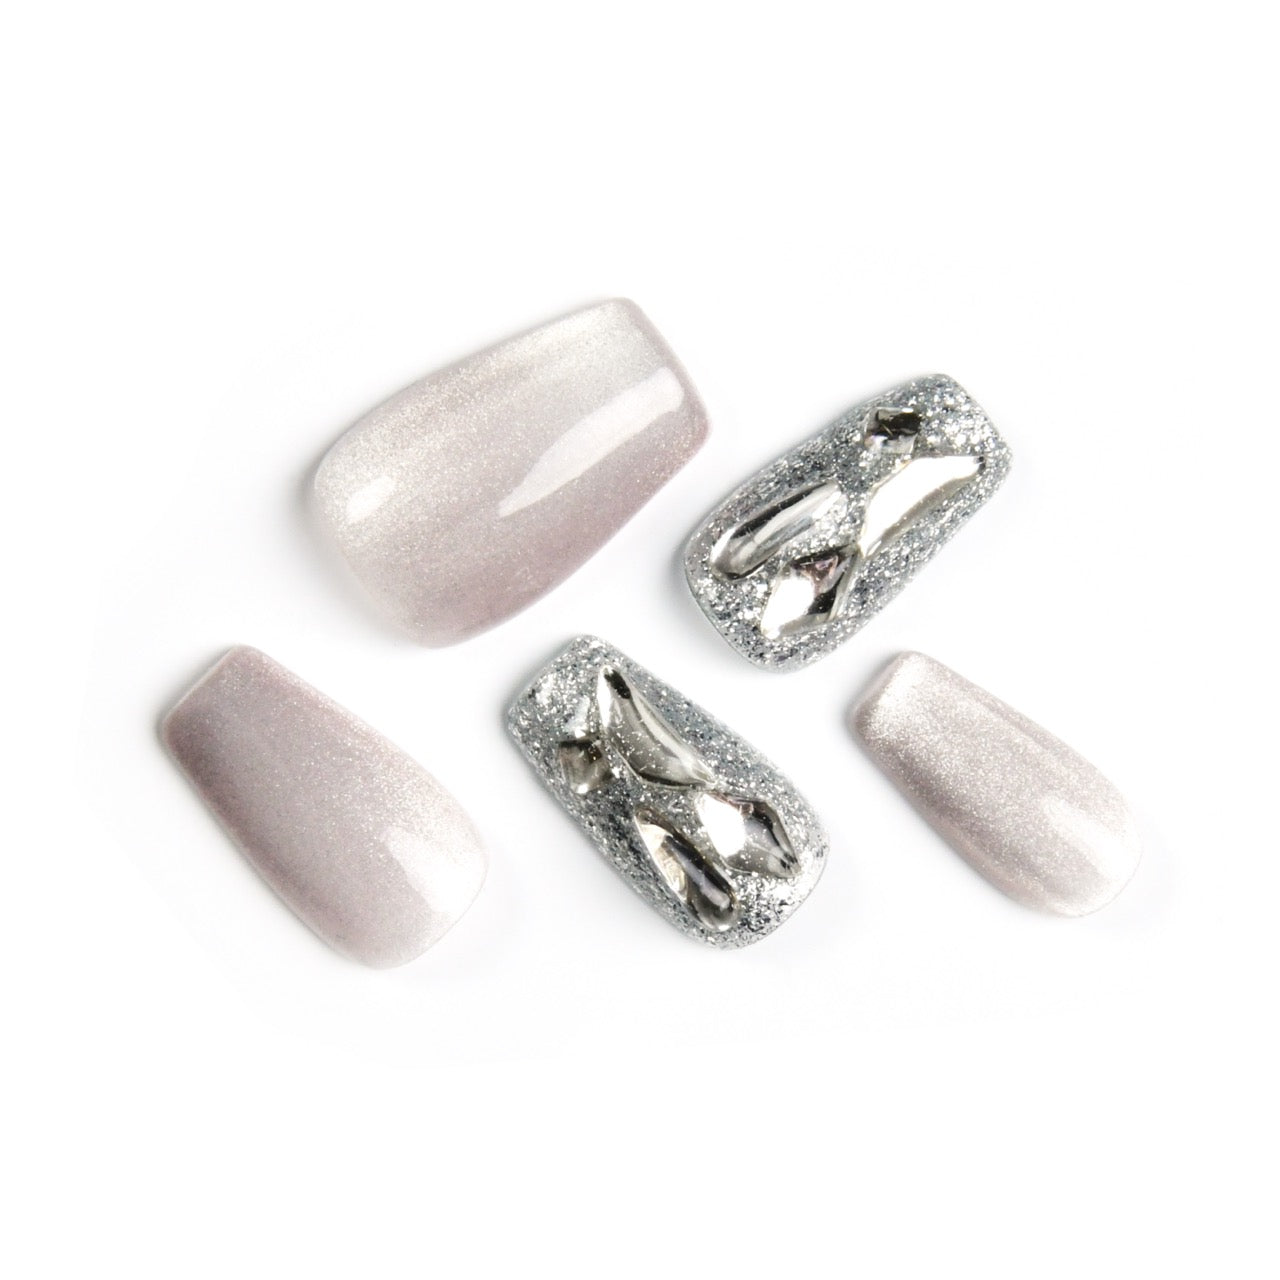 Glitter Silver Acrylic Coffin Medium Handmade Press On Nails With Diamond-BEYONDCANVA 